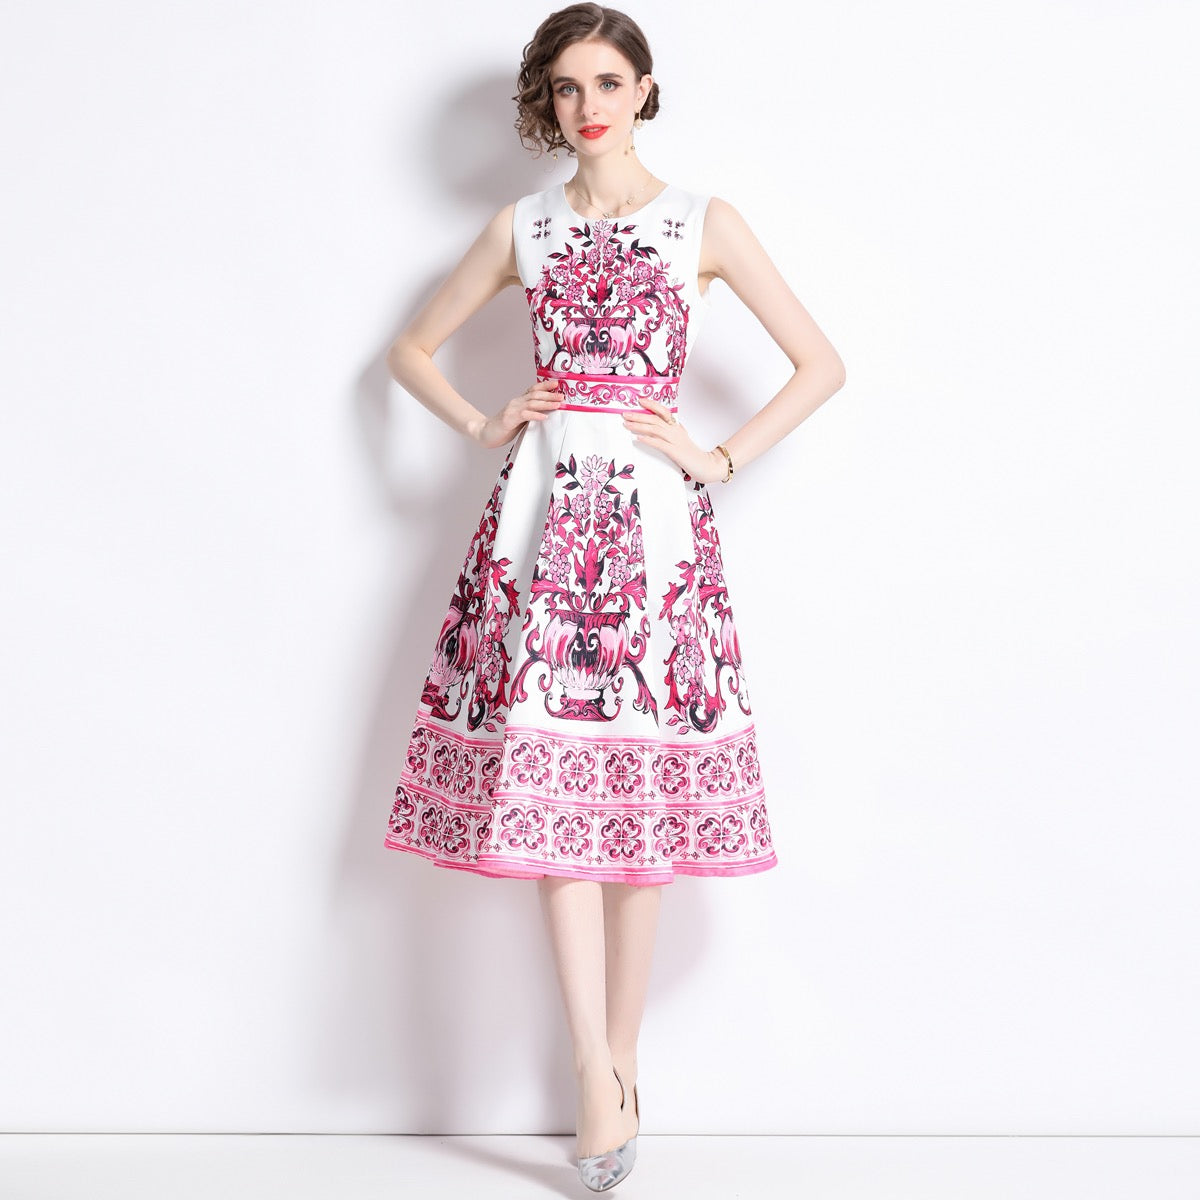 *NEW Princess Tile Print Midi Dress